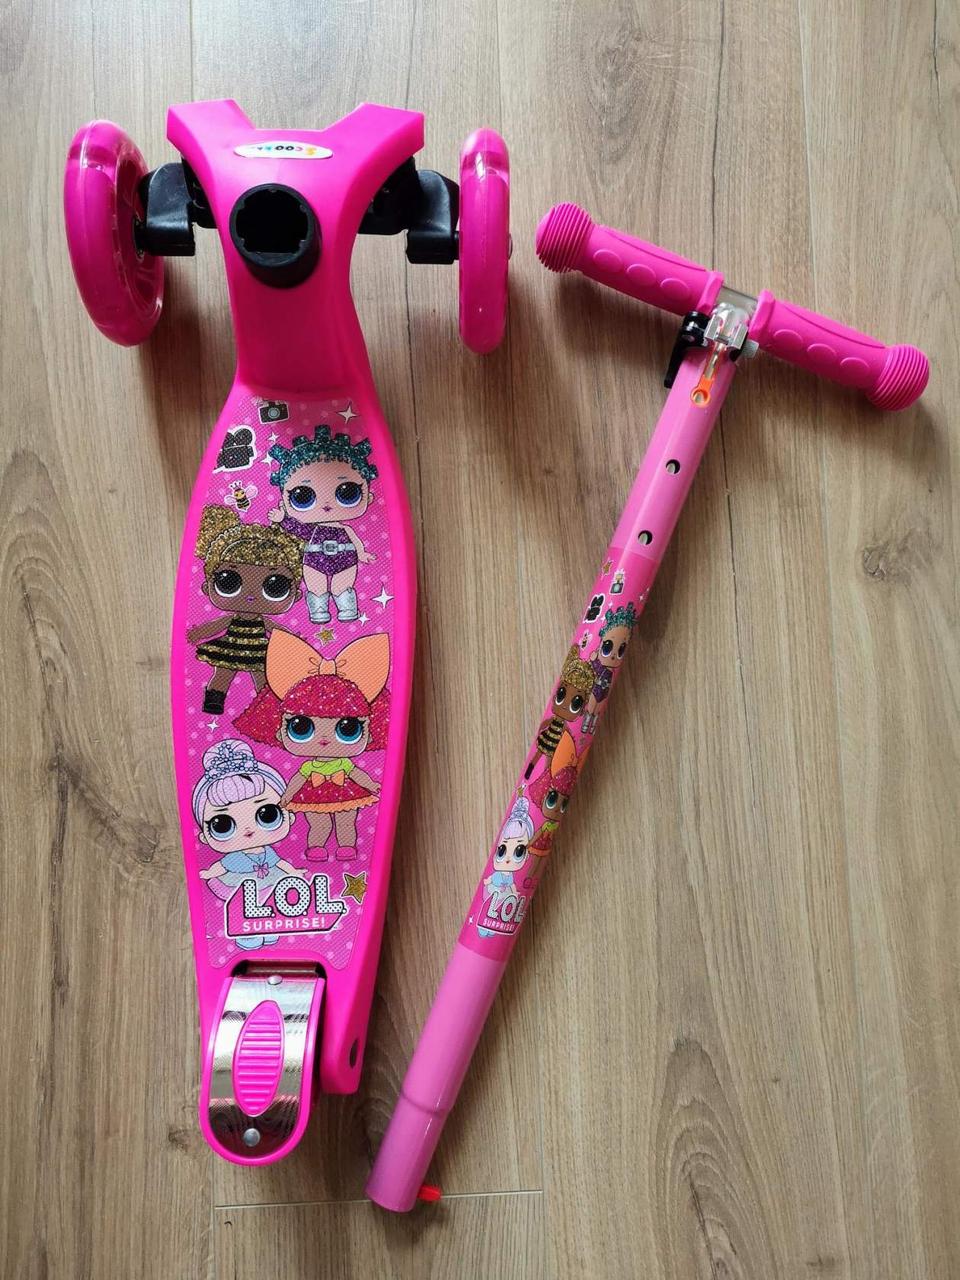 Самокат maxi  Scooter  "LOL" розовый с рисунком КУКЛЫ ЛОЛ  (макси скутер ), фото 1